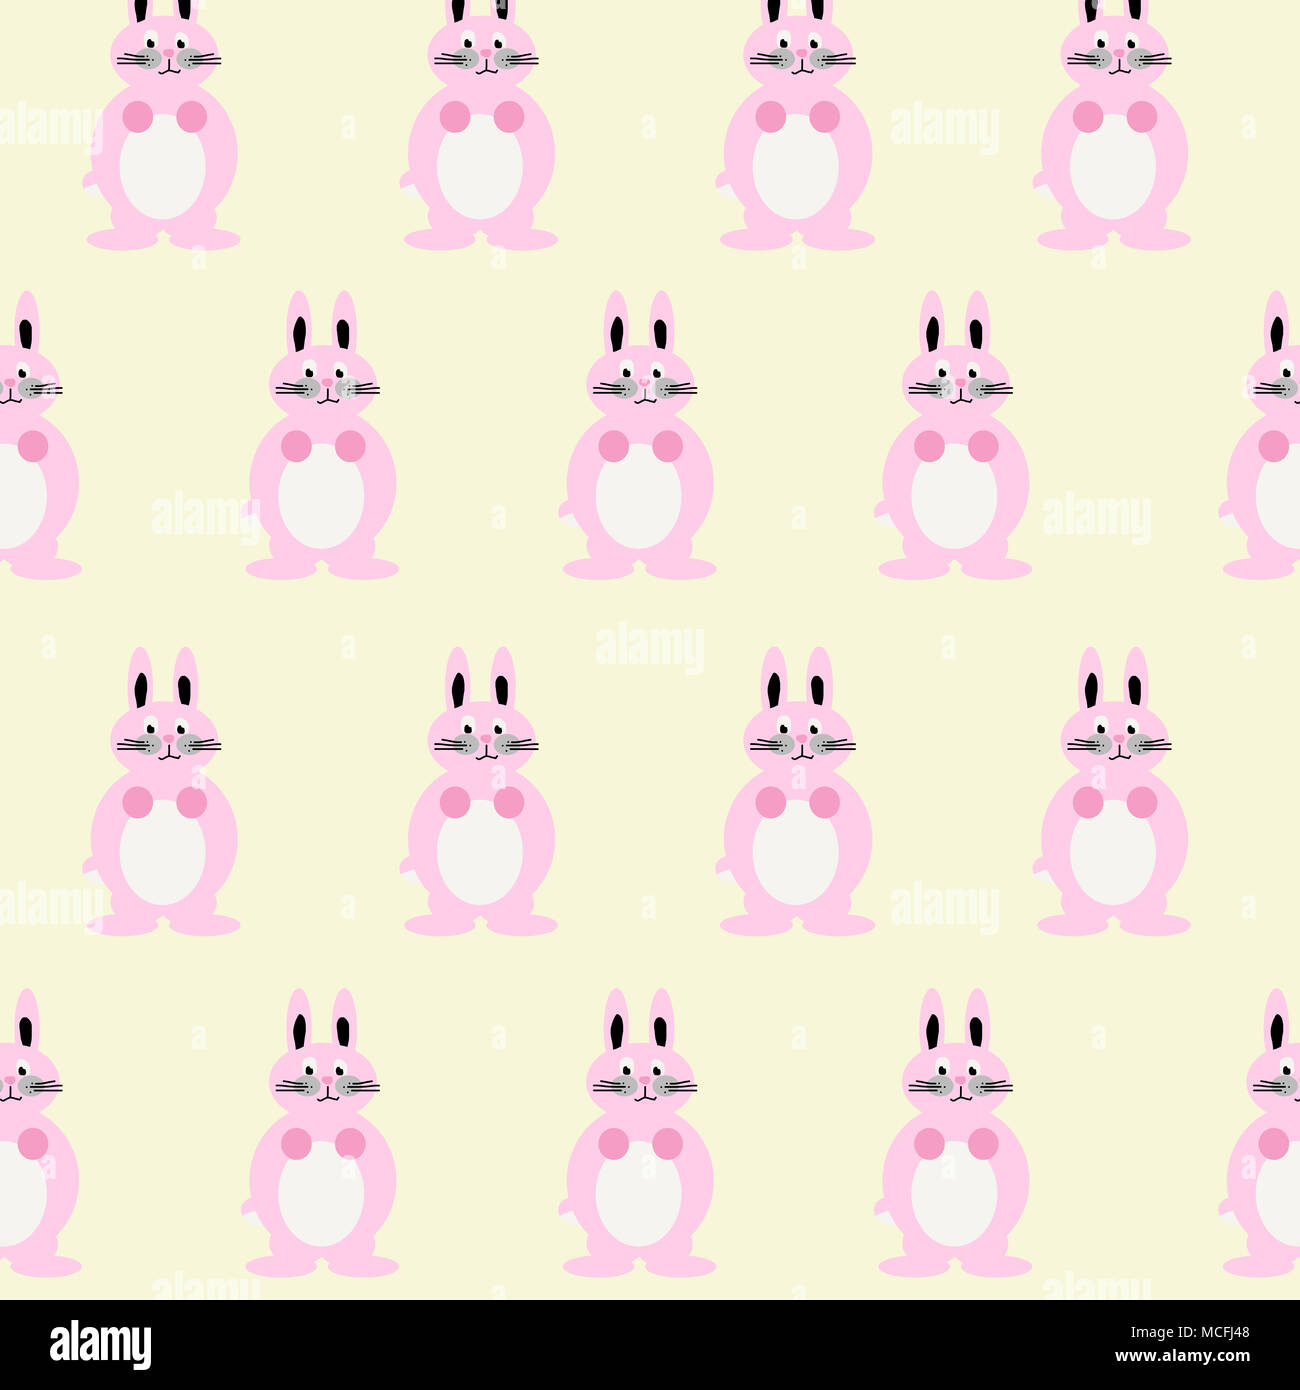 Illustration Coloree De Bunny Incluant Plusieurs Lapins Rose Bebe Joli Dessin Enfantin Photo Stock Alamy